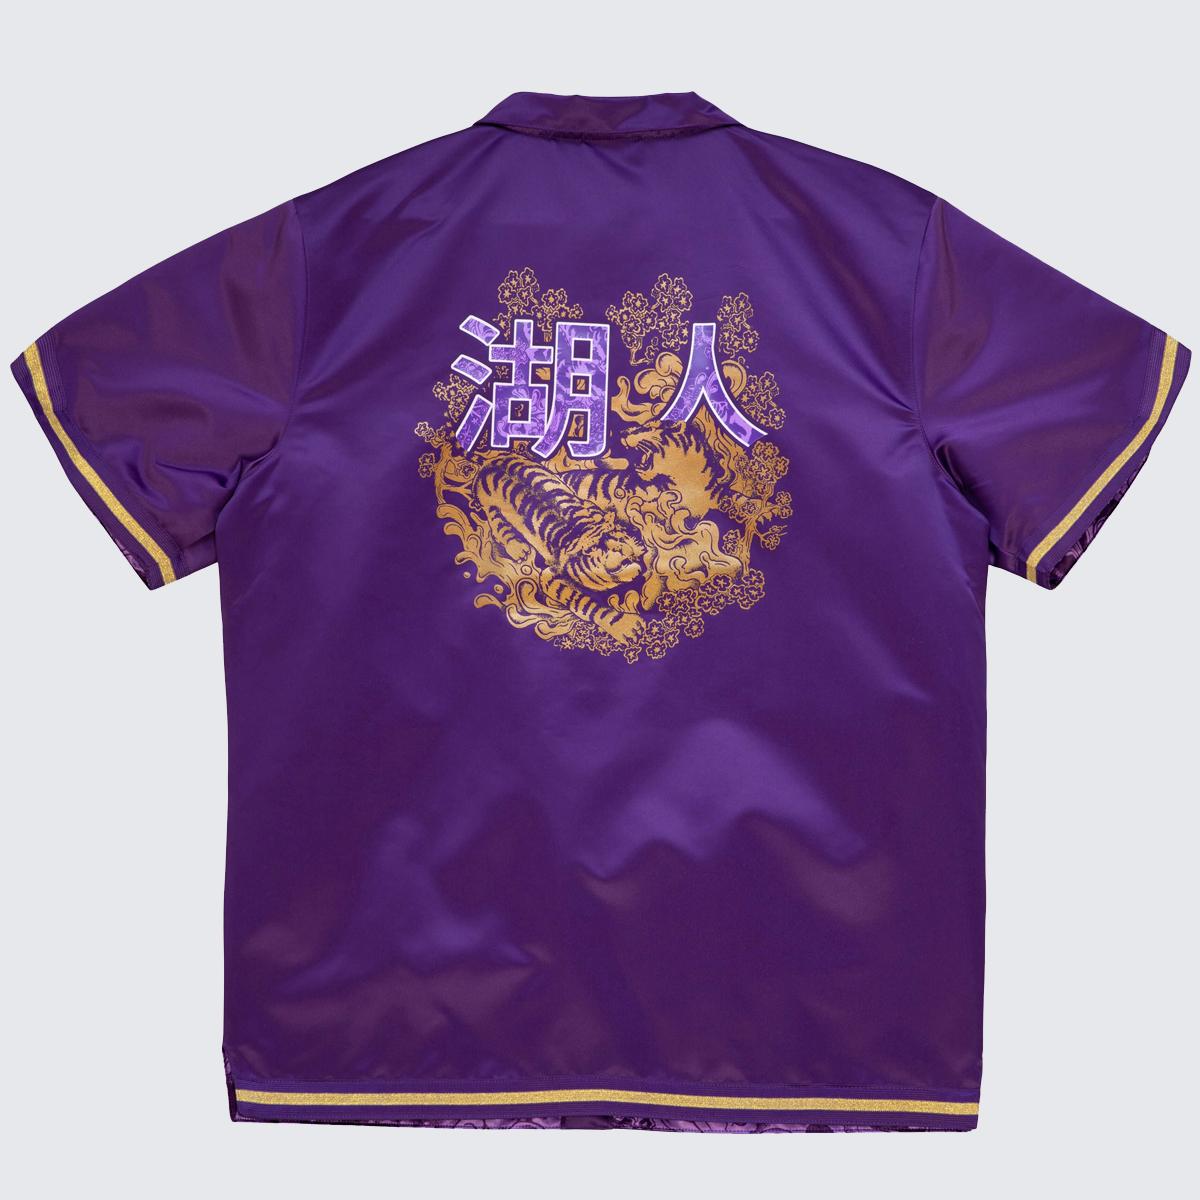 Mitchell & Ness CNY 4.0 Shooting shirt LA Lakers dark purple - Shop-Tetuan